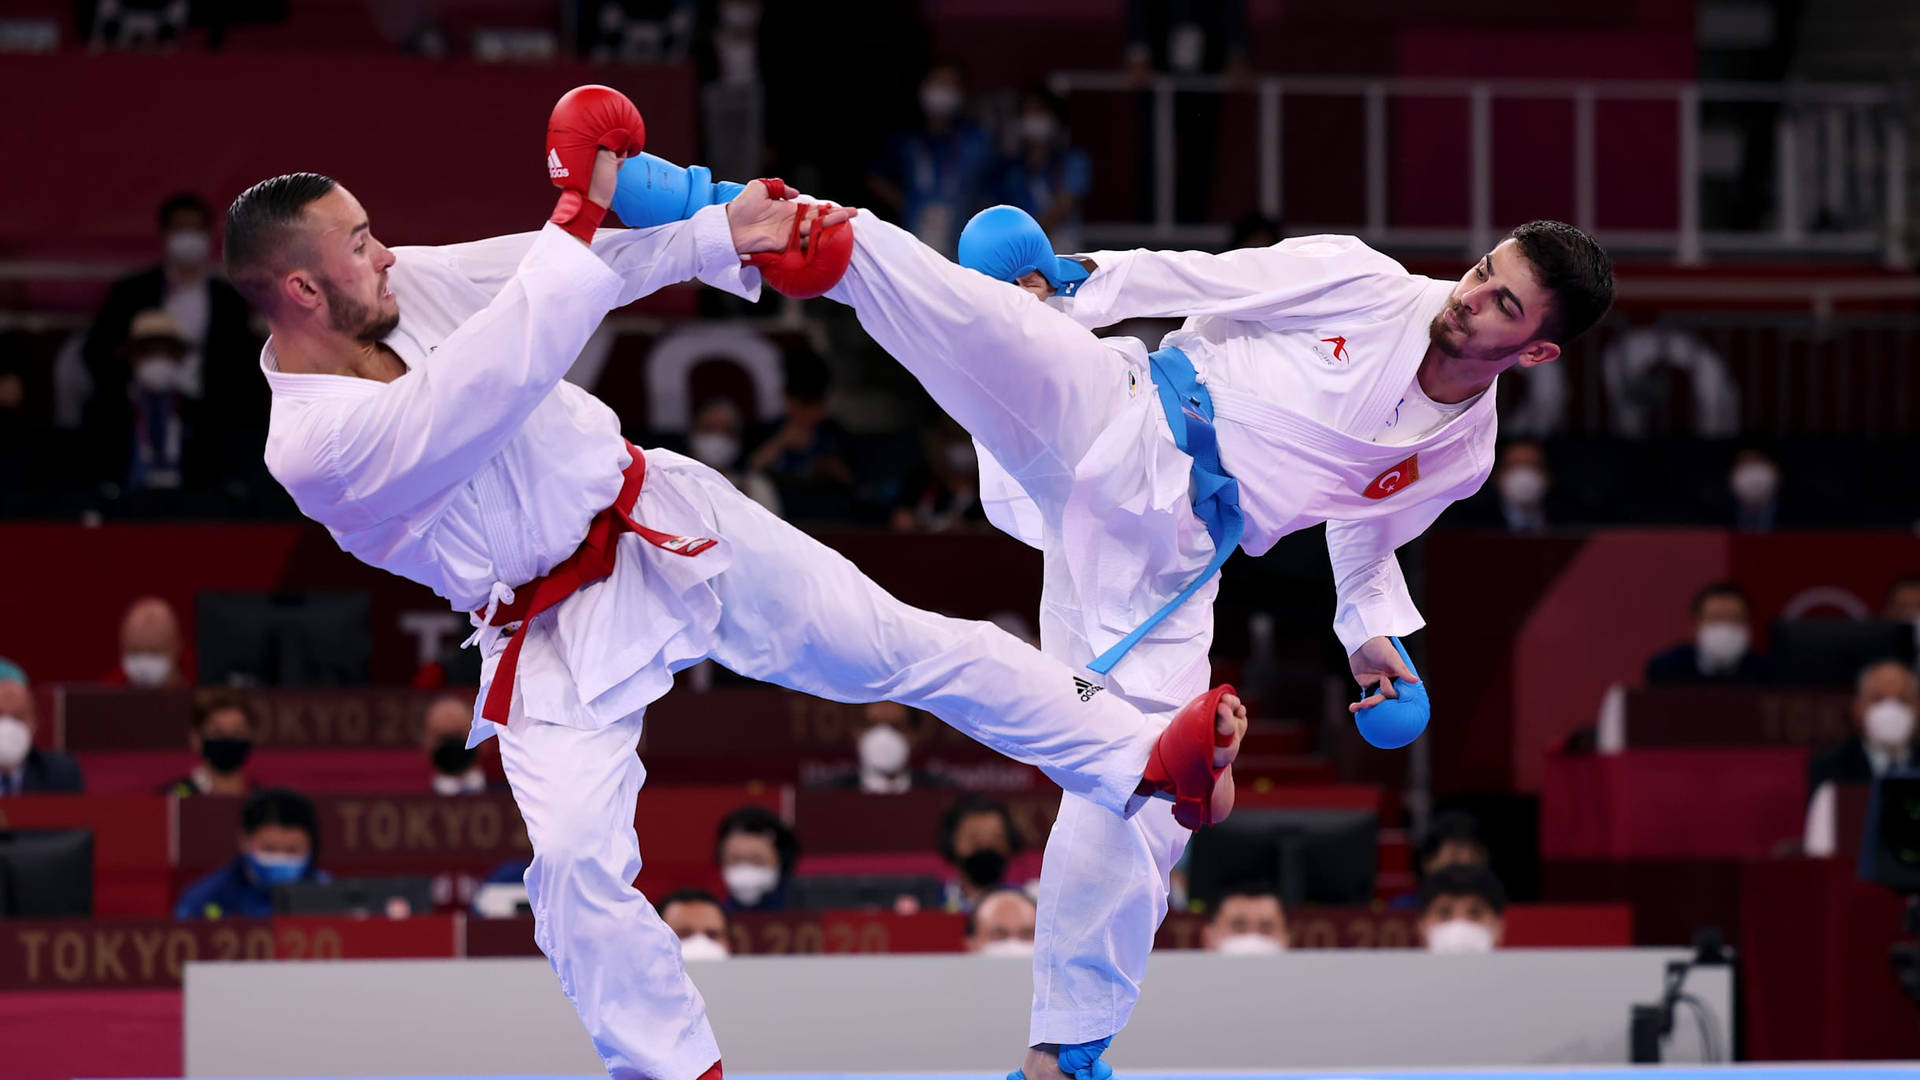 Dynamic Karate Athletes Showcasing a Double Kick Wallpaper